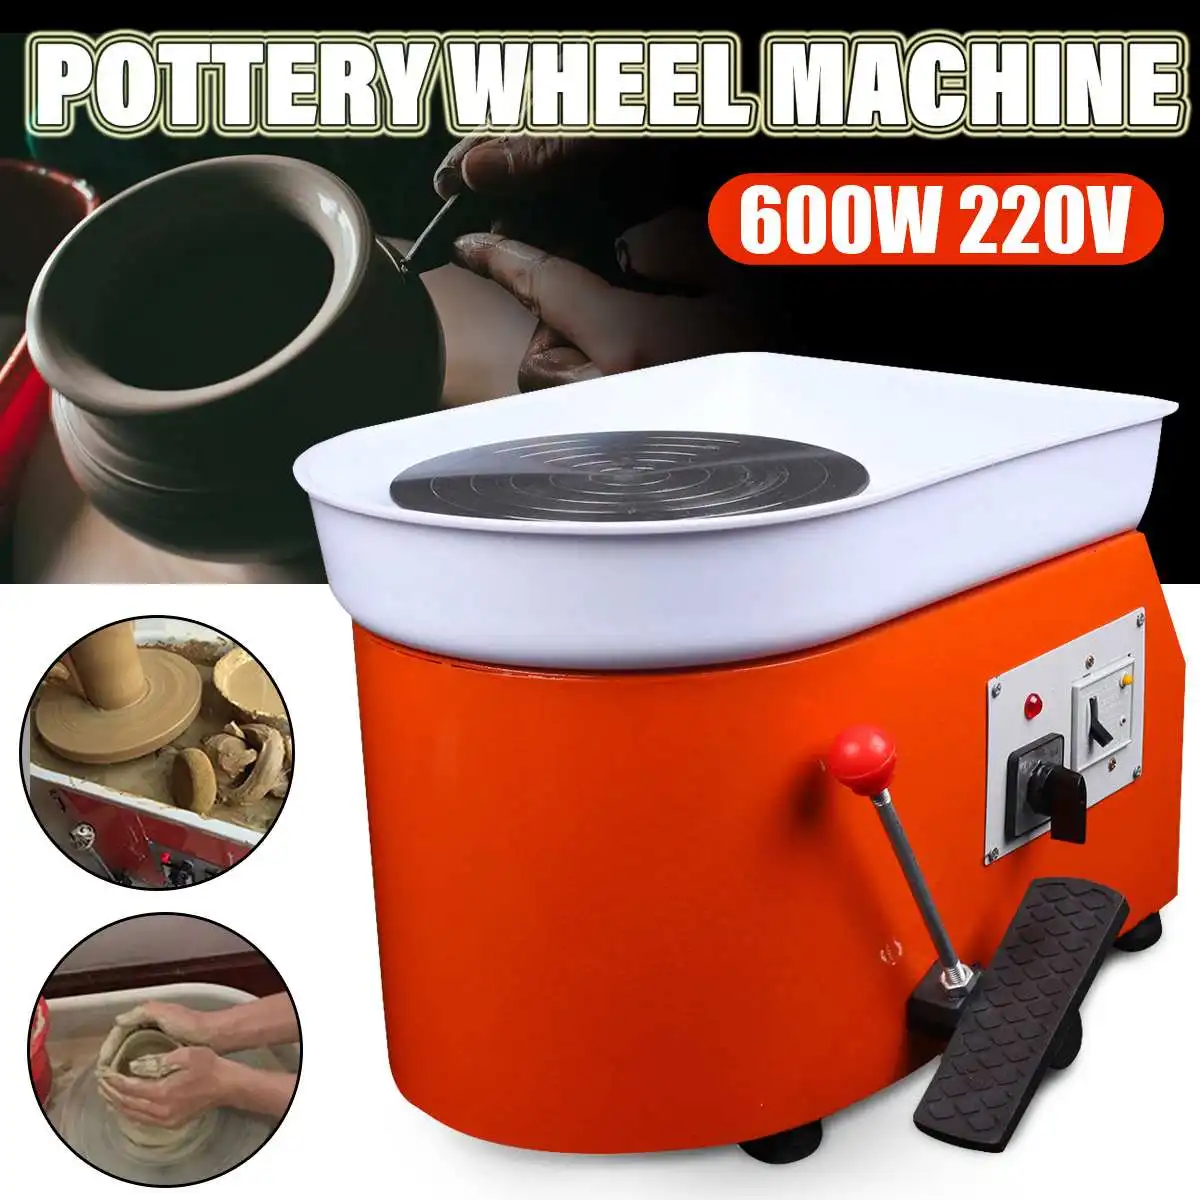 

25CM Turning Electric Pottery Wheel Ceramic Machine 220V 600W DIY Mini Ceramic Clay Pottery Forming Tools for Art Ceramic Works